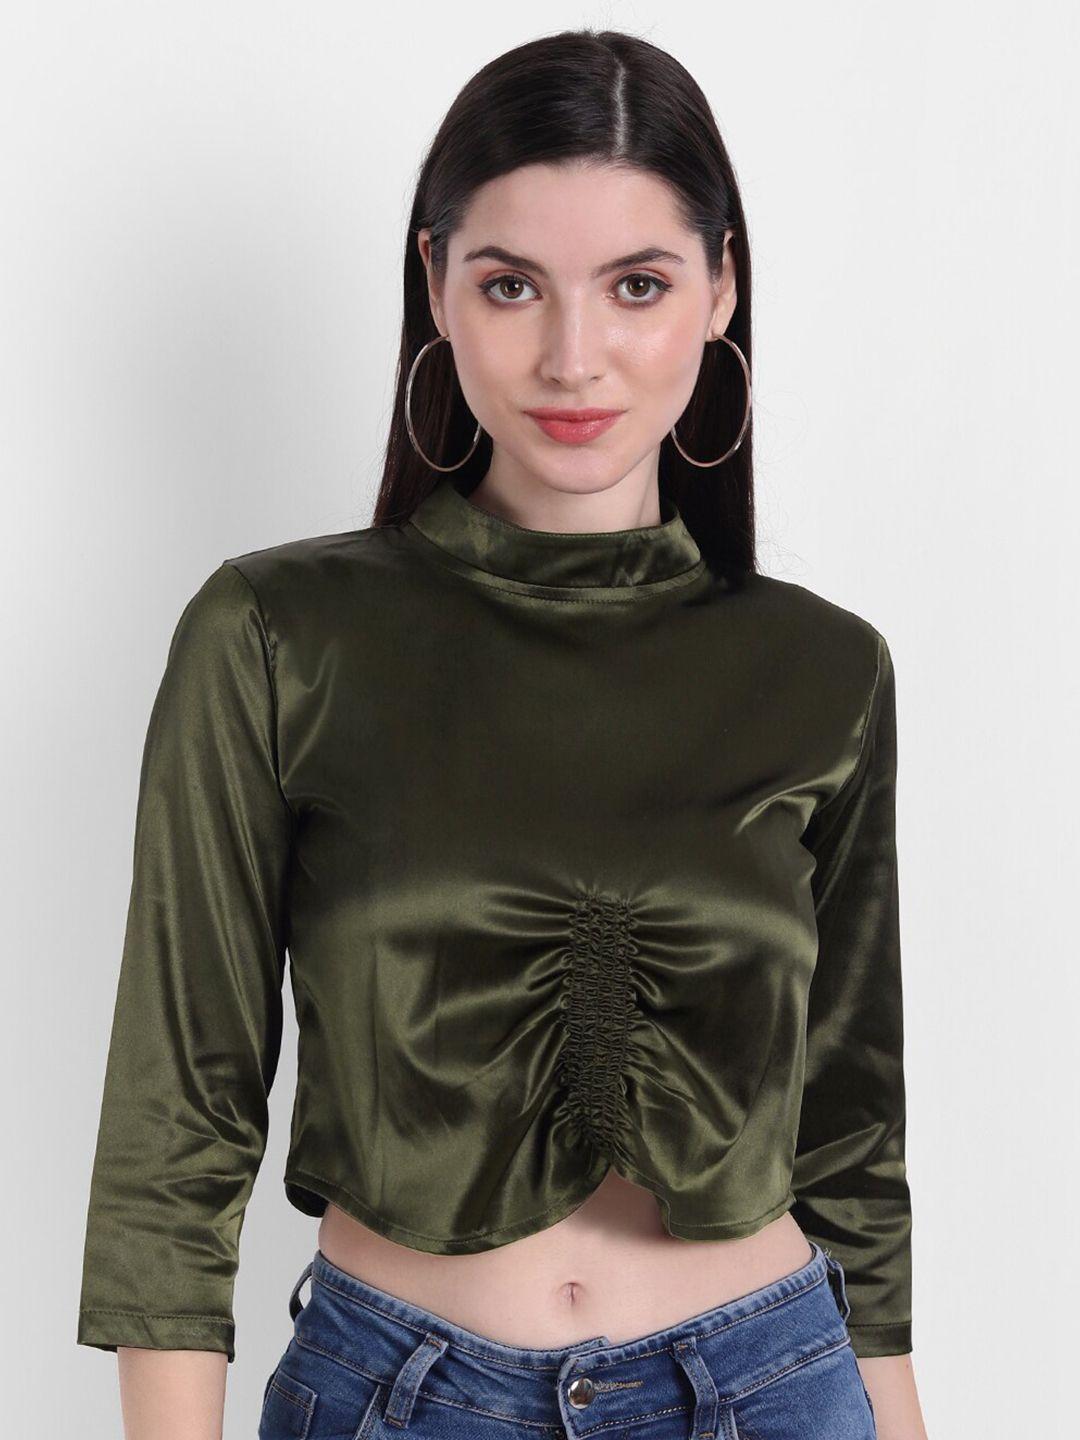 rediscover fashion green satin crop top